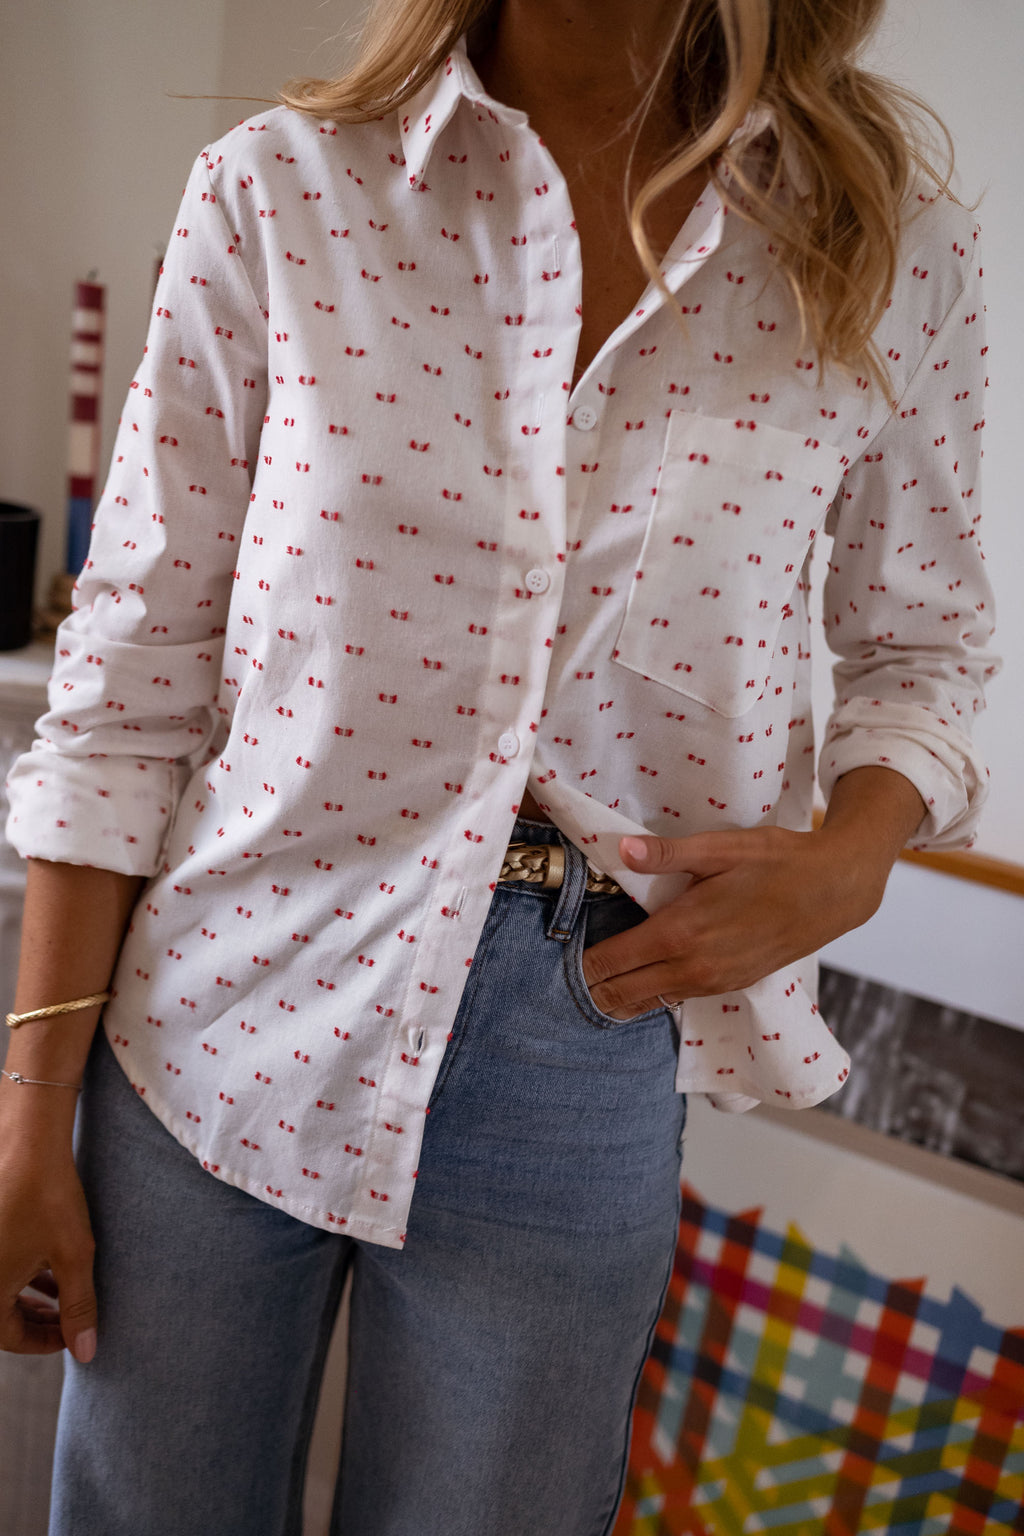 Nina shirt - white patterned red